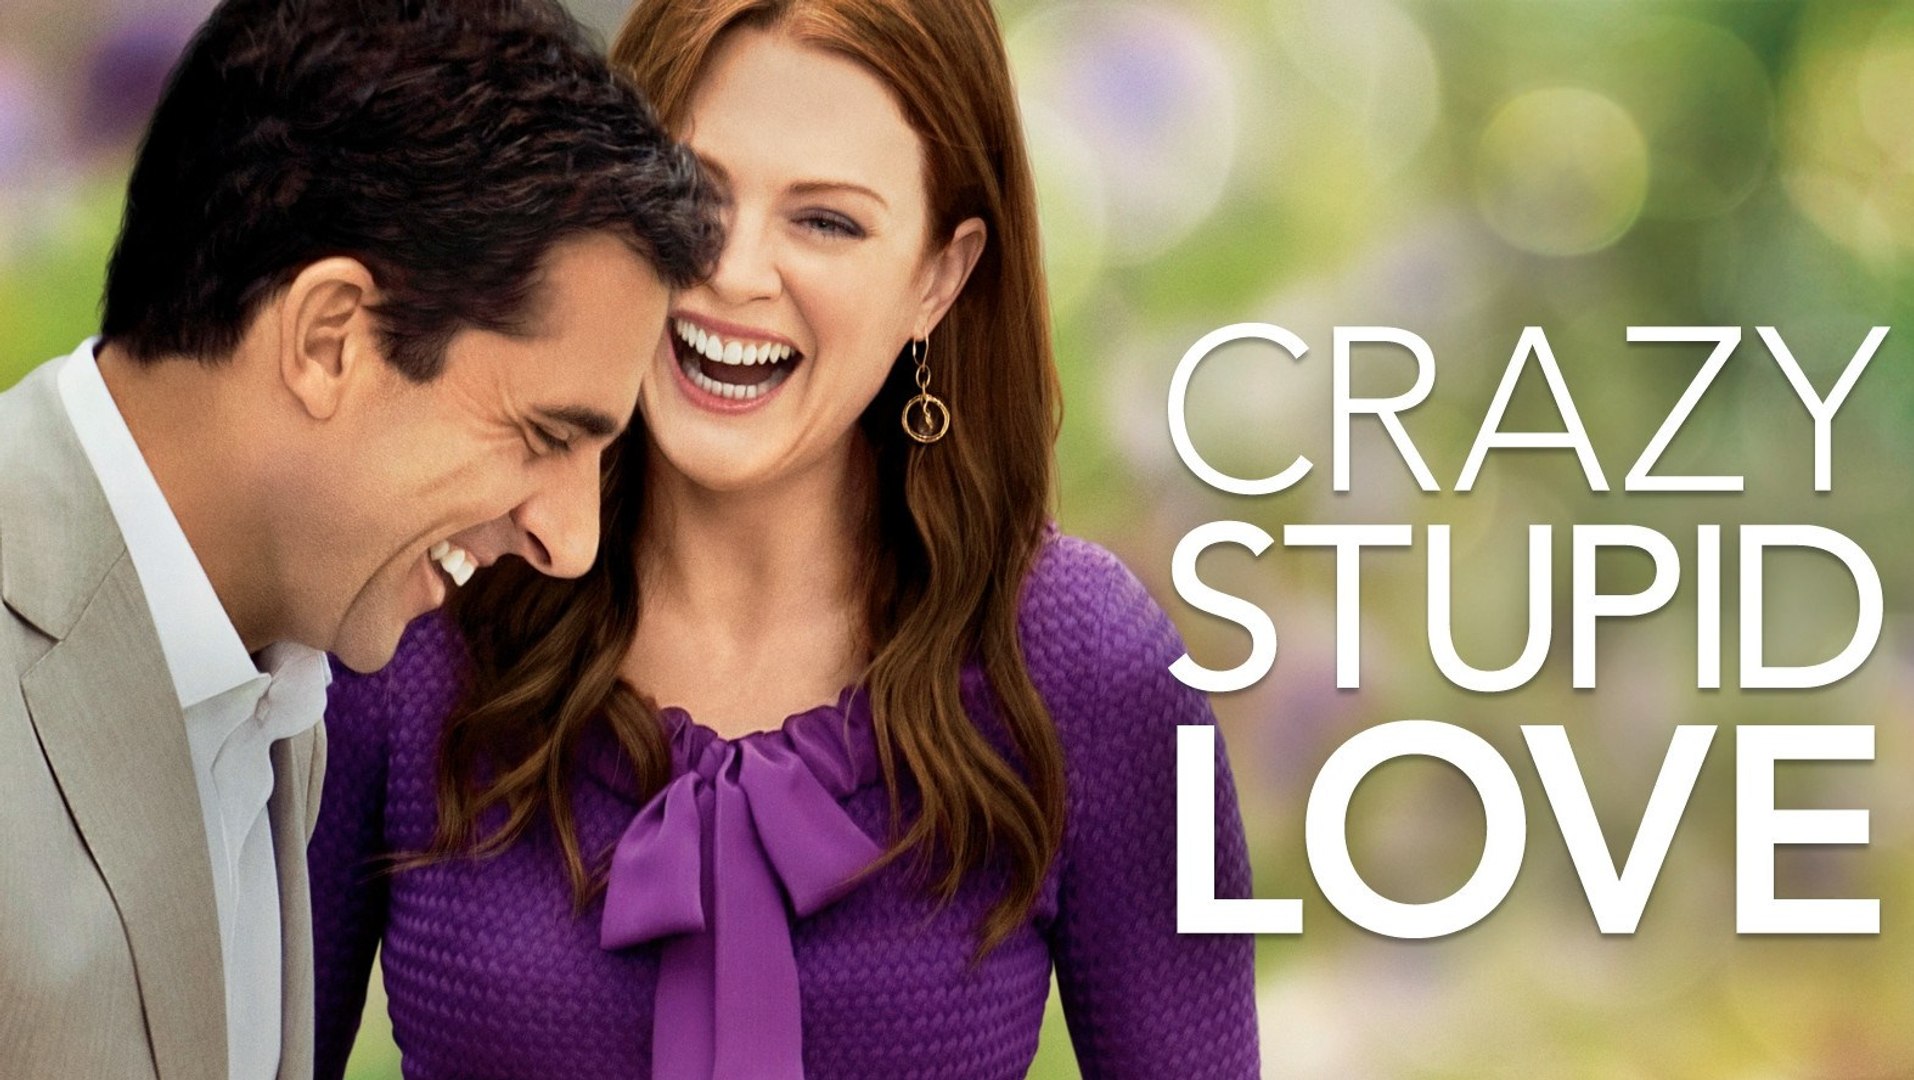  Crazy, Stupid, Love : Steve Carell, Julianne Moore, Marisa  Tomei, Ryan Gosling, Emma Stone, Glenn Ficarra, John Requa: Movies & TV